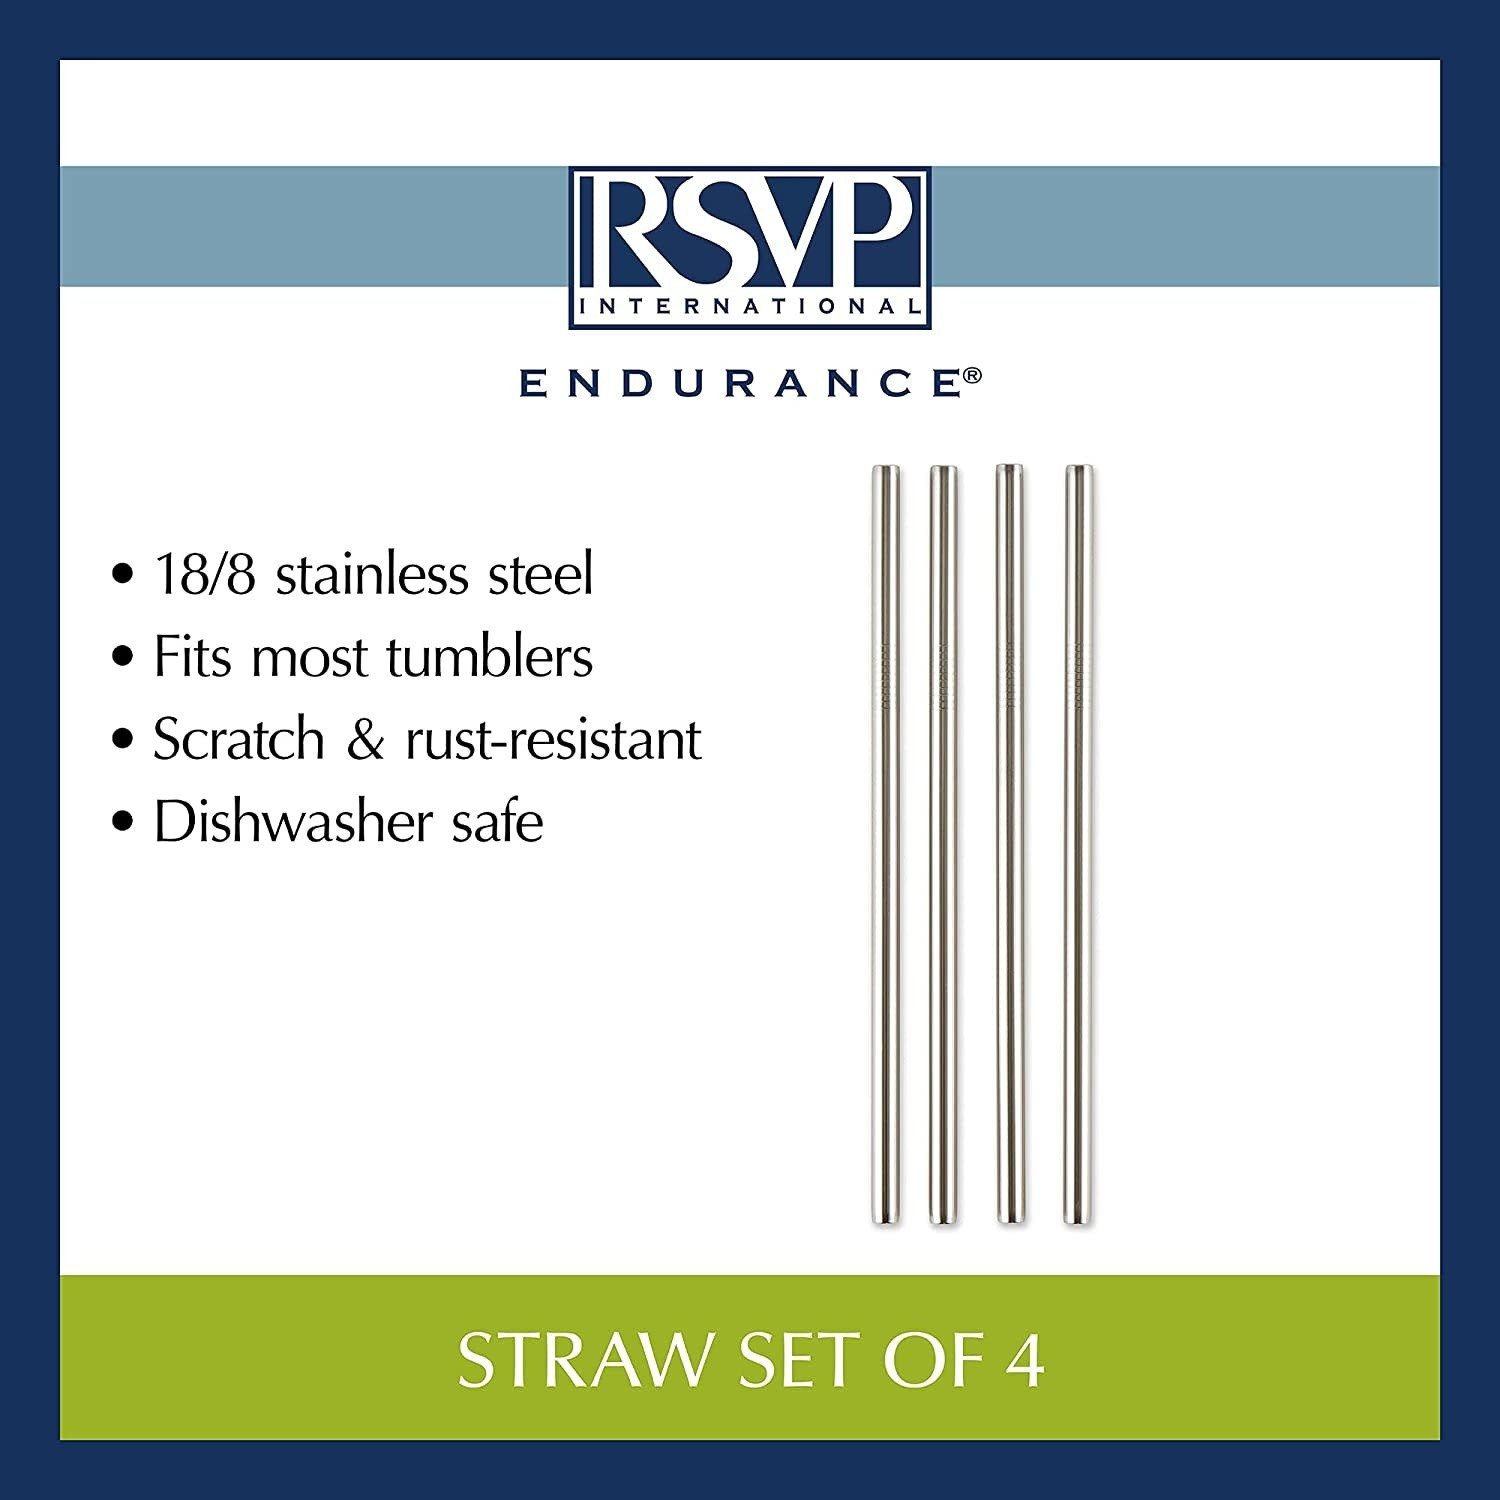 Rainbow Reusable Plastic Straws, set of 24 - Whisk